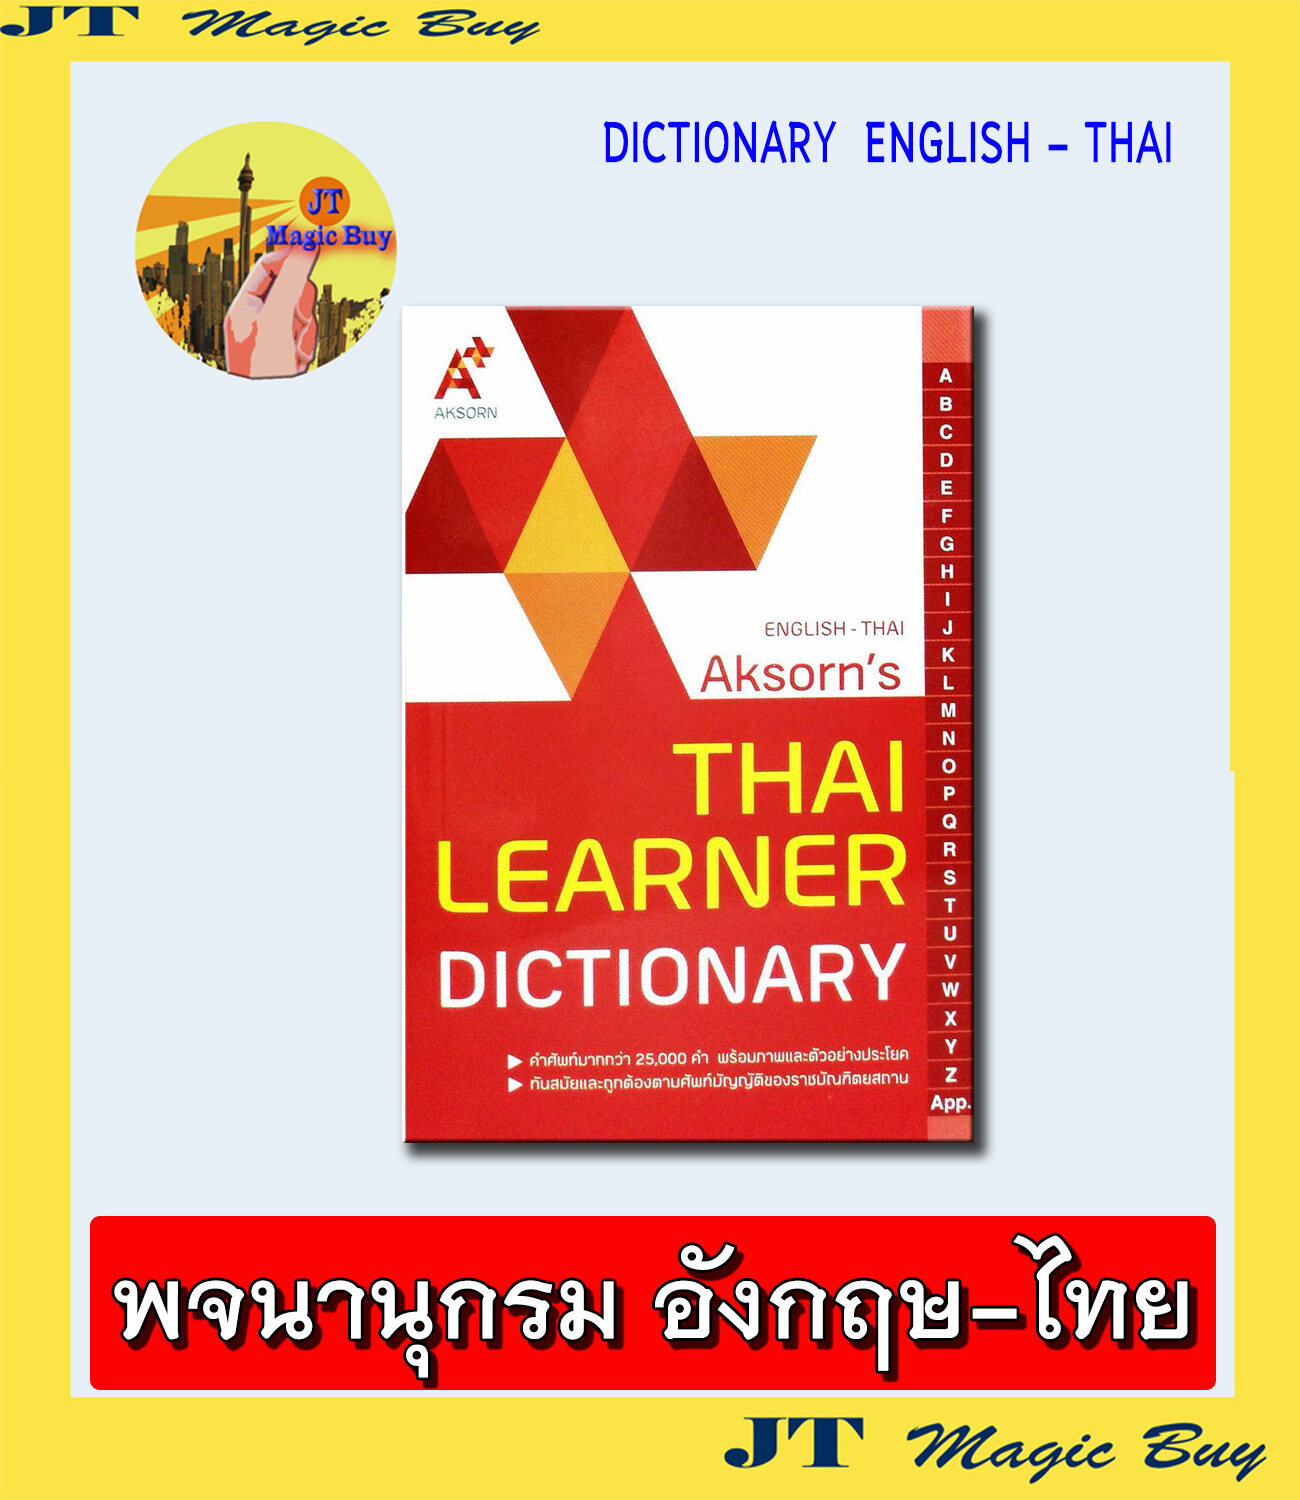 Dictionary English-Thai ดิกชันนารี อังกฤษ-ไทย Aksorn's พจนานุกรม อังกฤษ-ไทย Thai Learner Dictionary อจท.